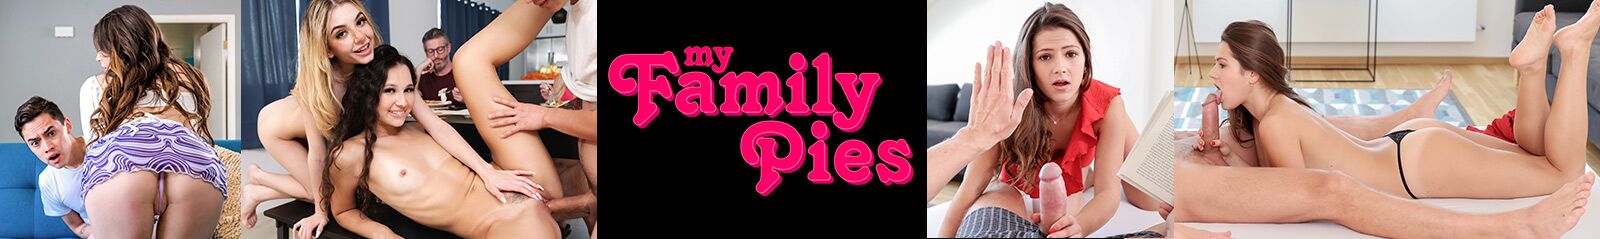 My family pies